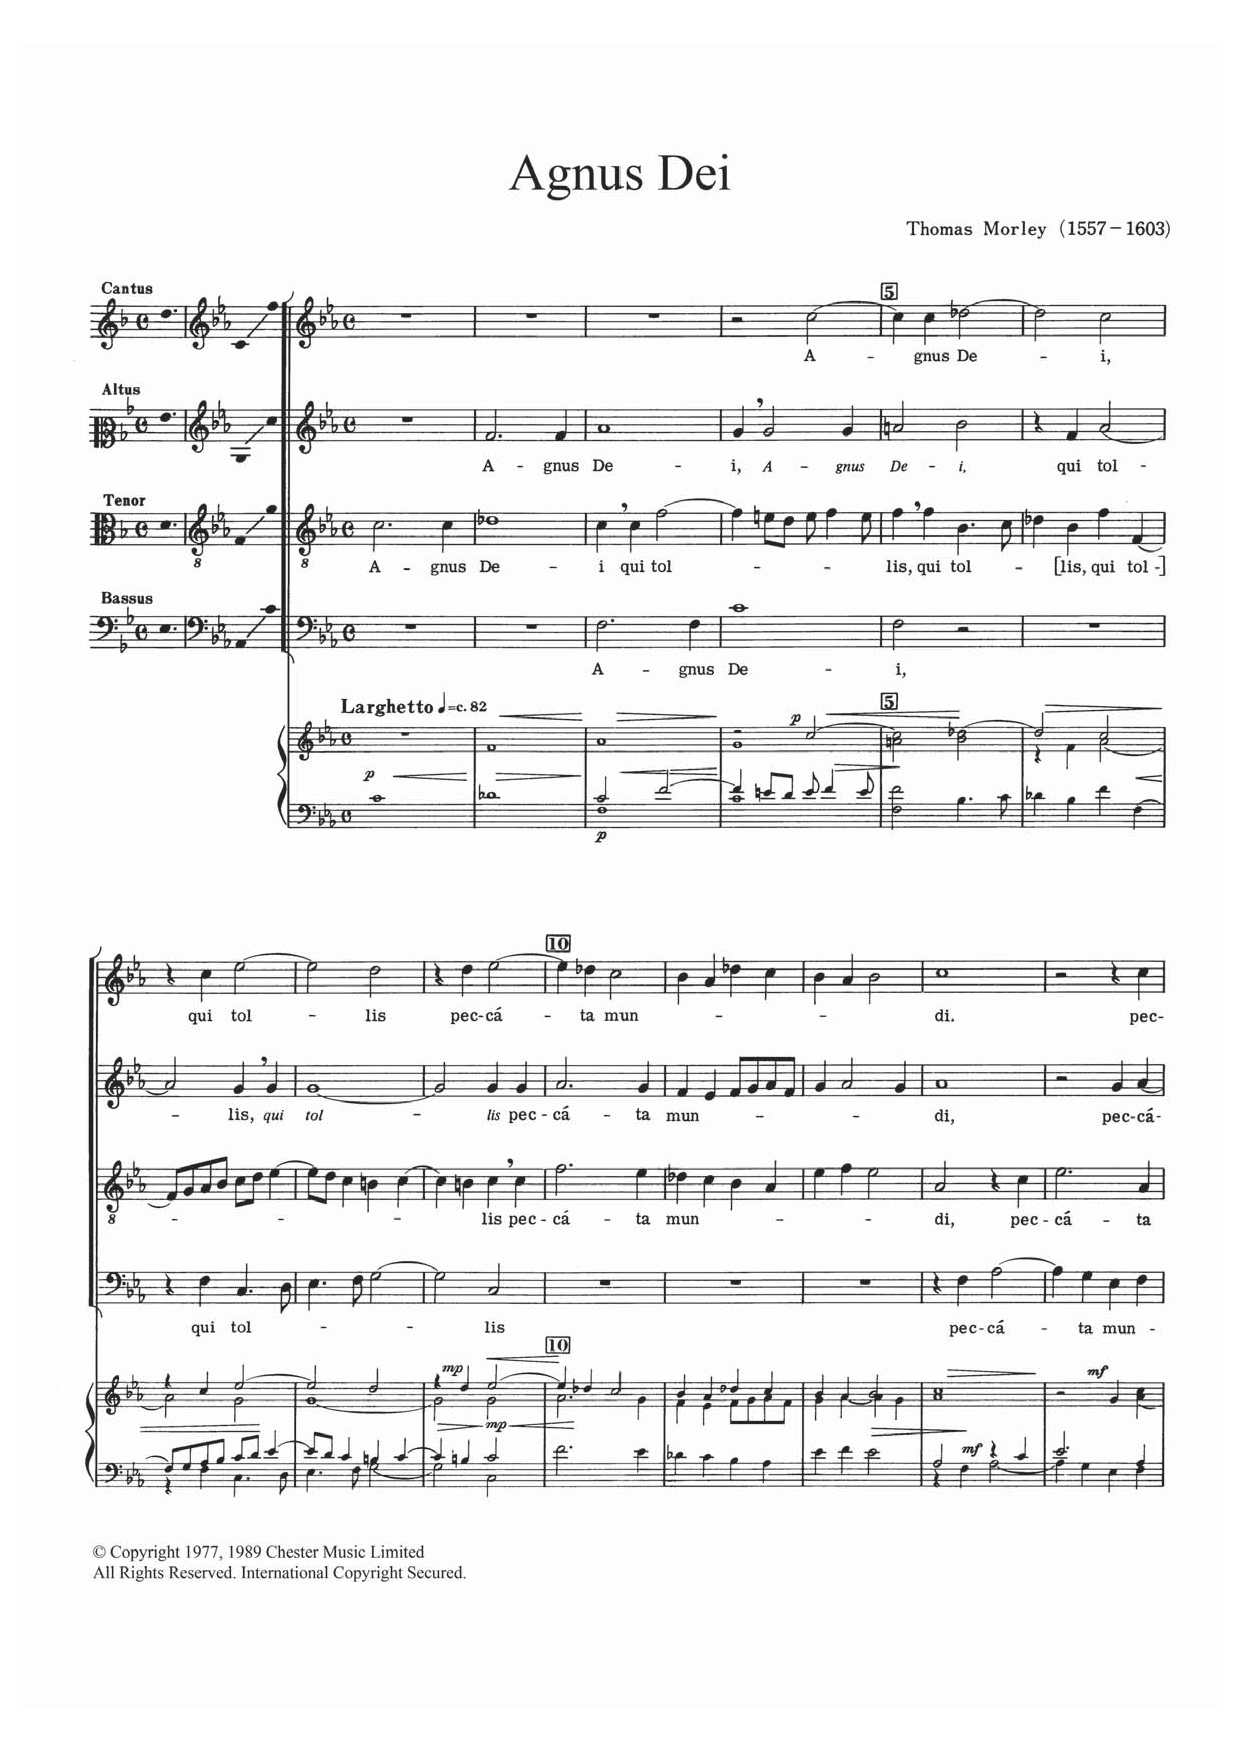 Thomas Morley Agnus Dei Sheet Music Notes & Chords for SATB - Download or Print PDF